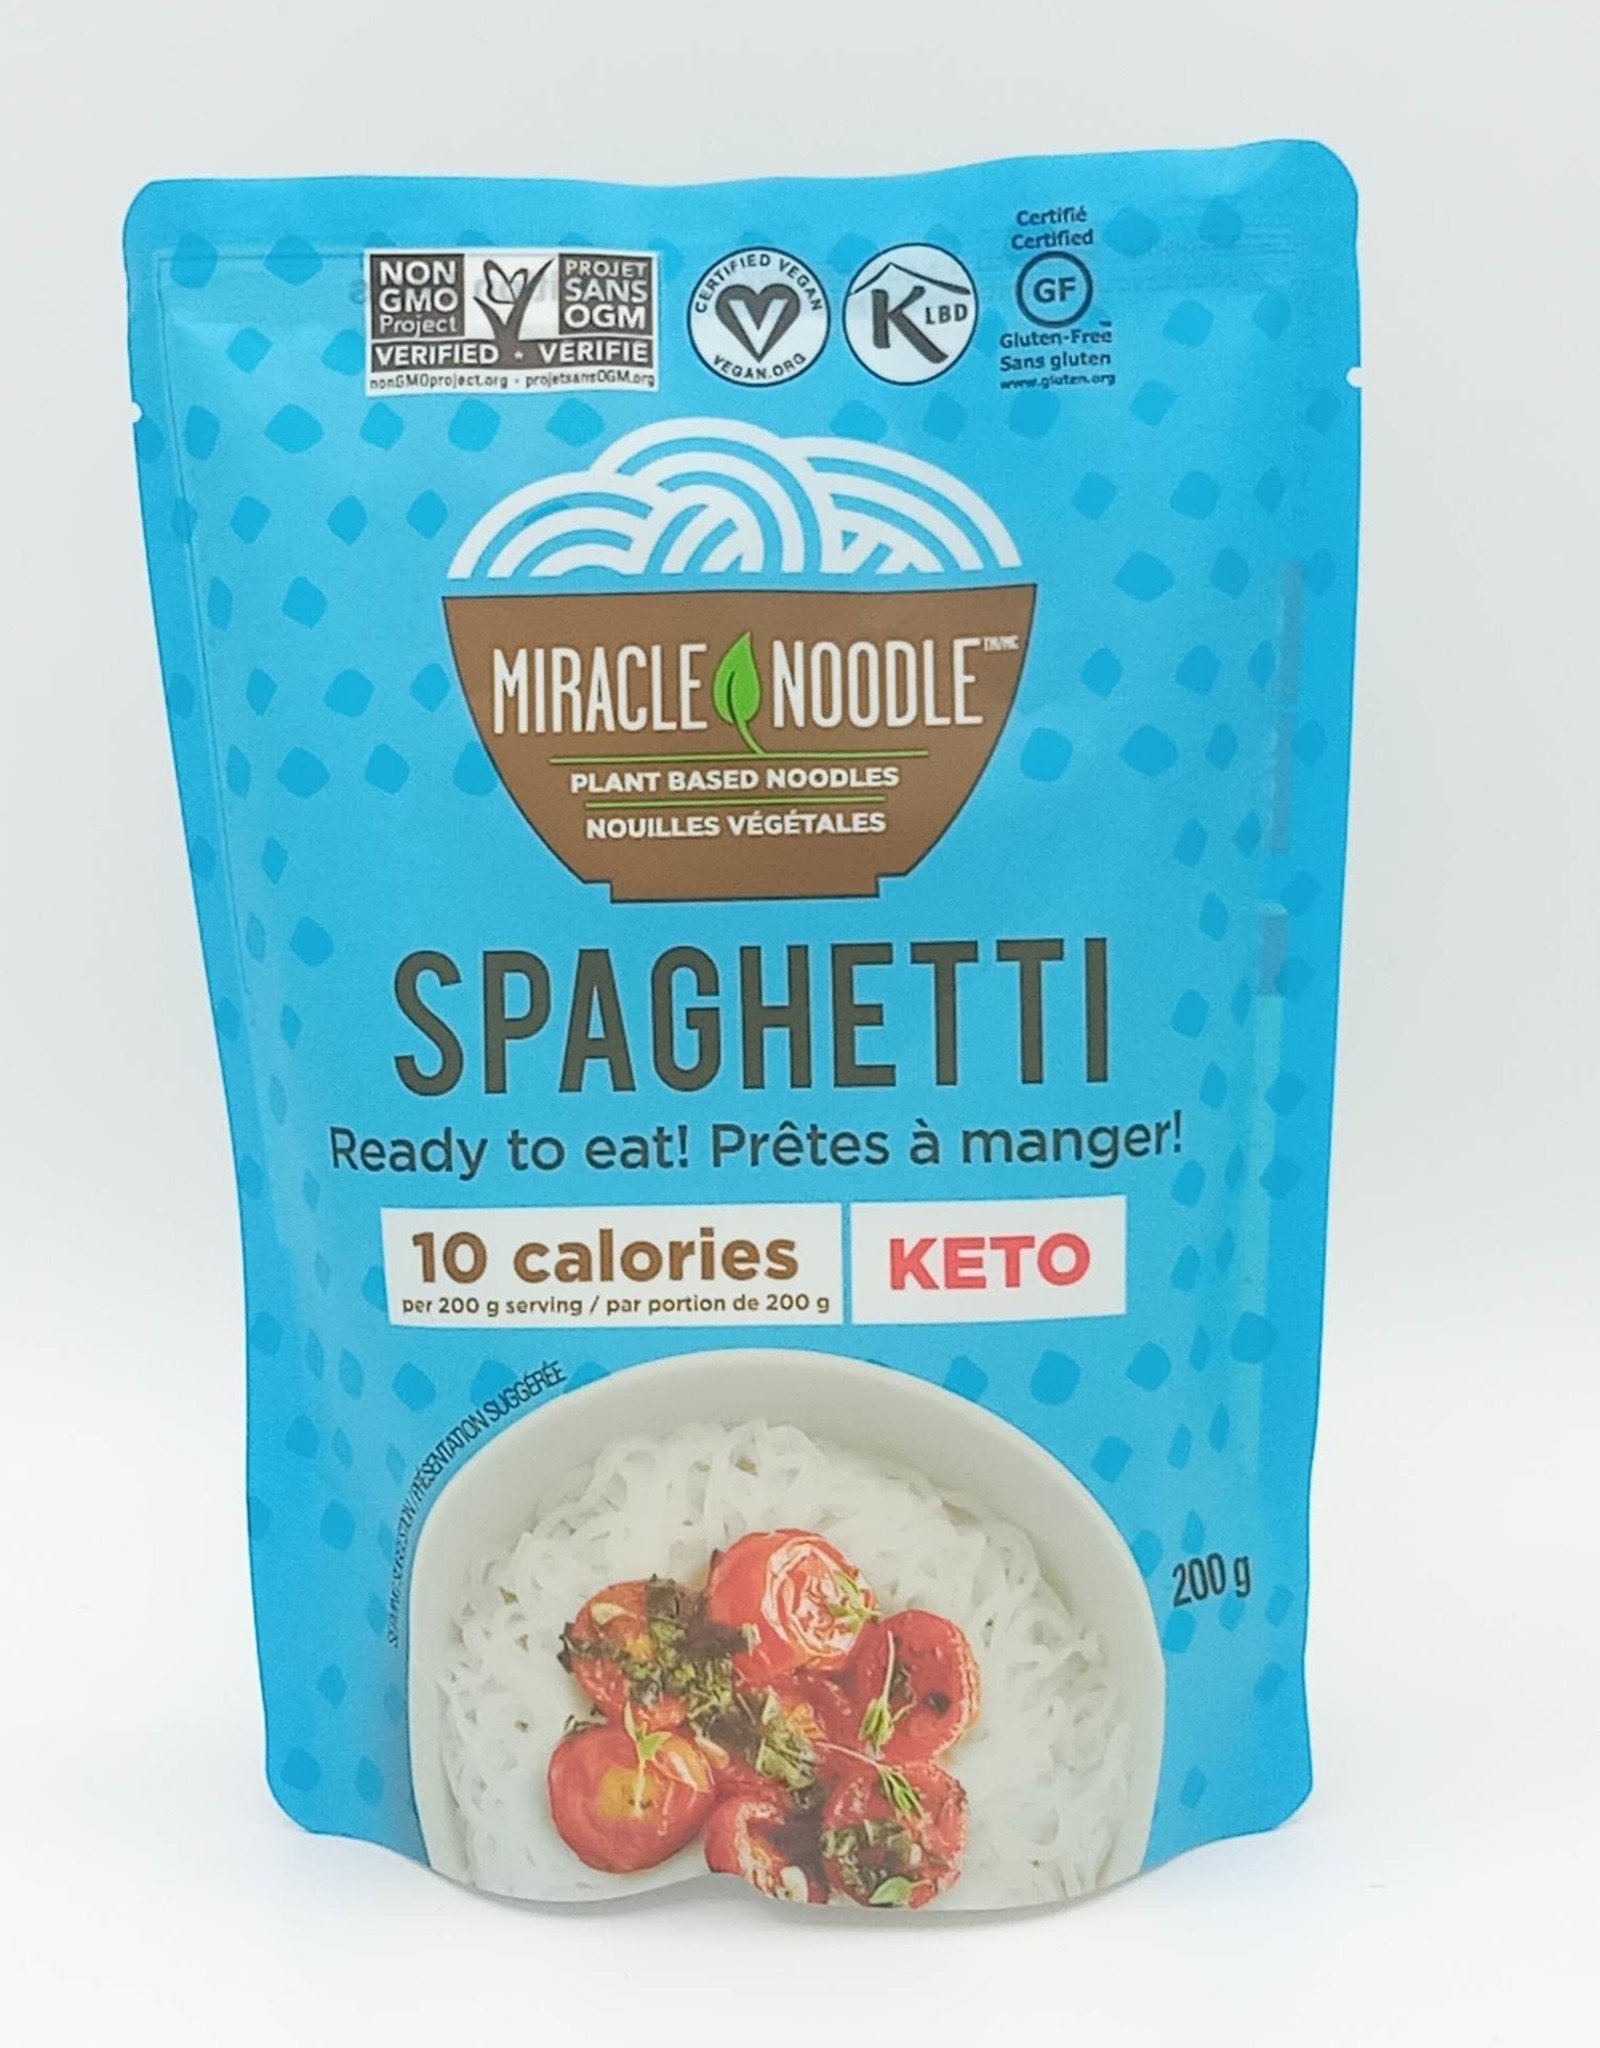 Miracle Noodle Miracle Noodle - Spaghetti Marinara, Prêt À Manger (280g)